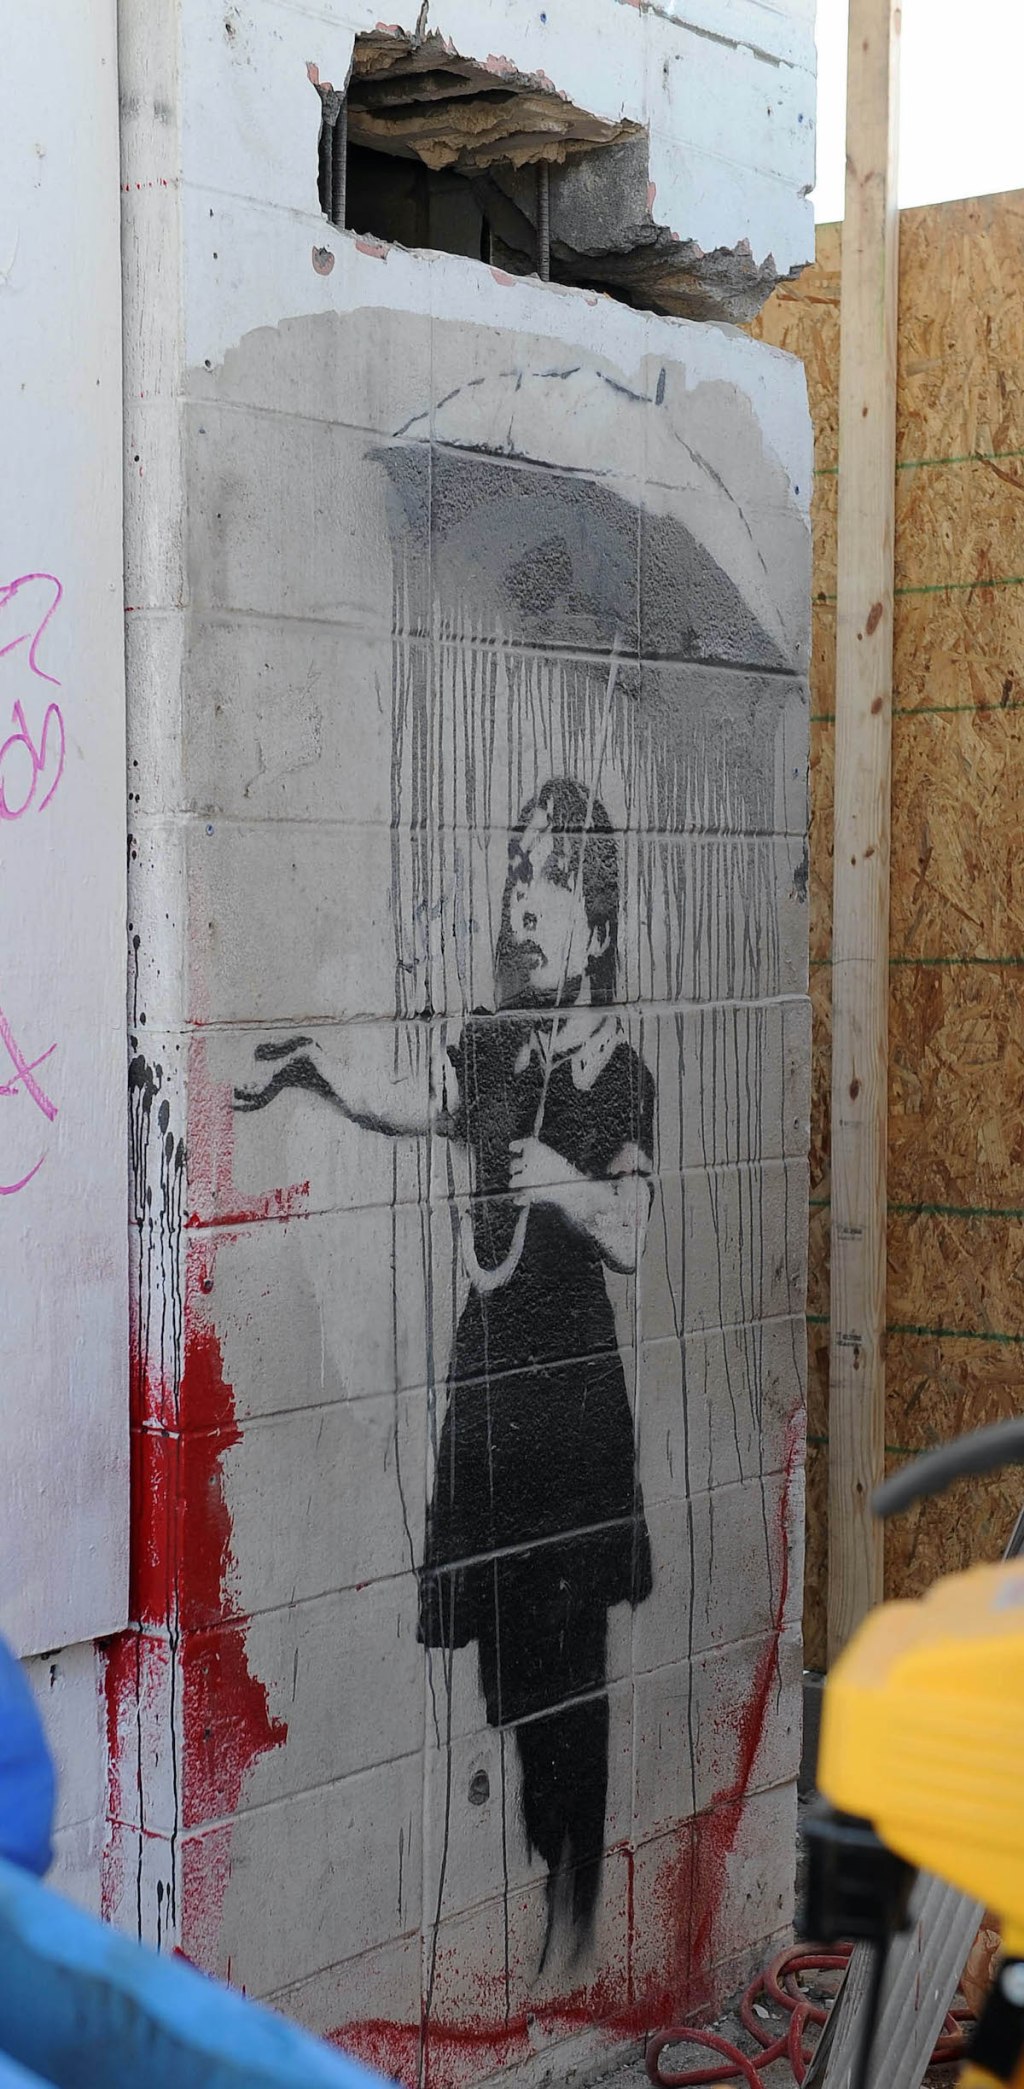 Banksy Murals Defaced in New Orleans – ARTnews.com